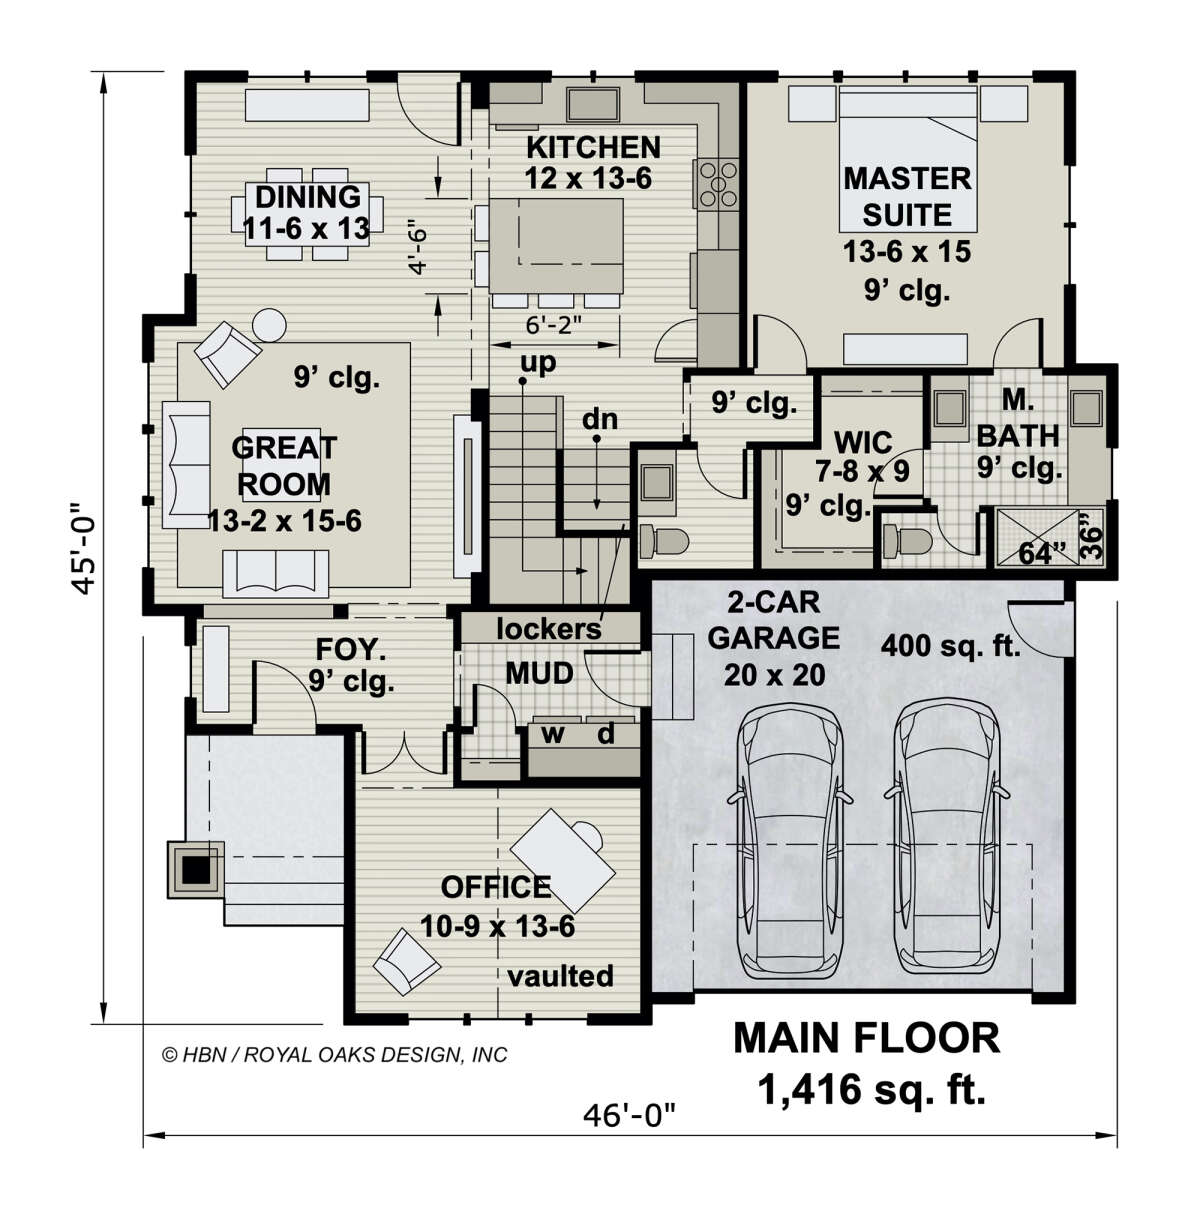 Craftsman Plan: 1,962 Square Feet, 3 Bedrooms, 2.5 Bathrooms - 098-00368